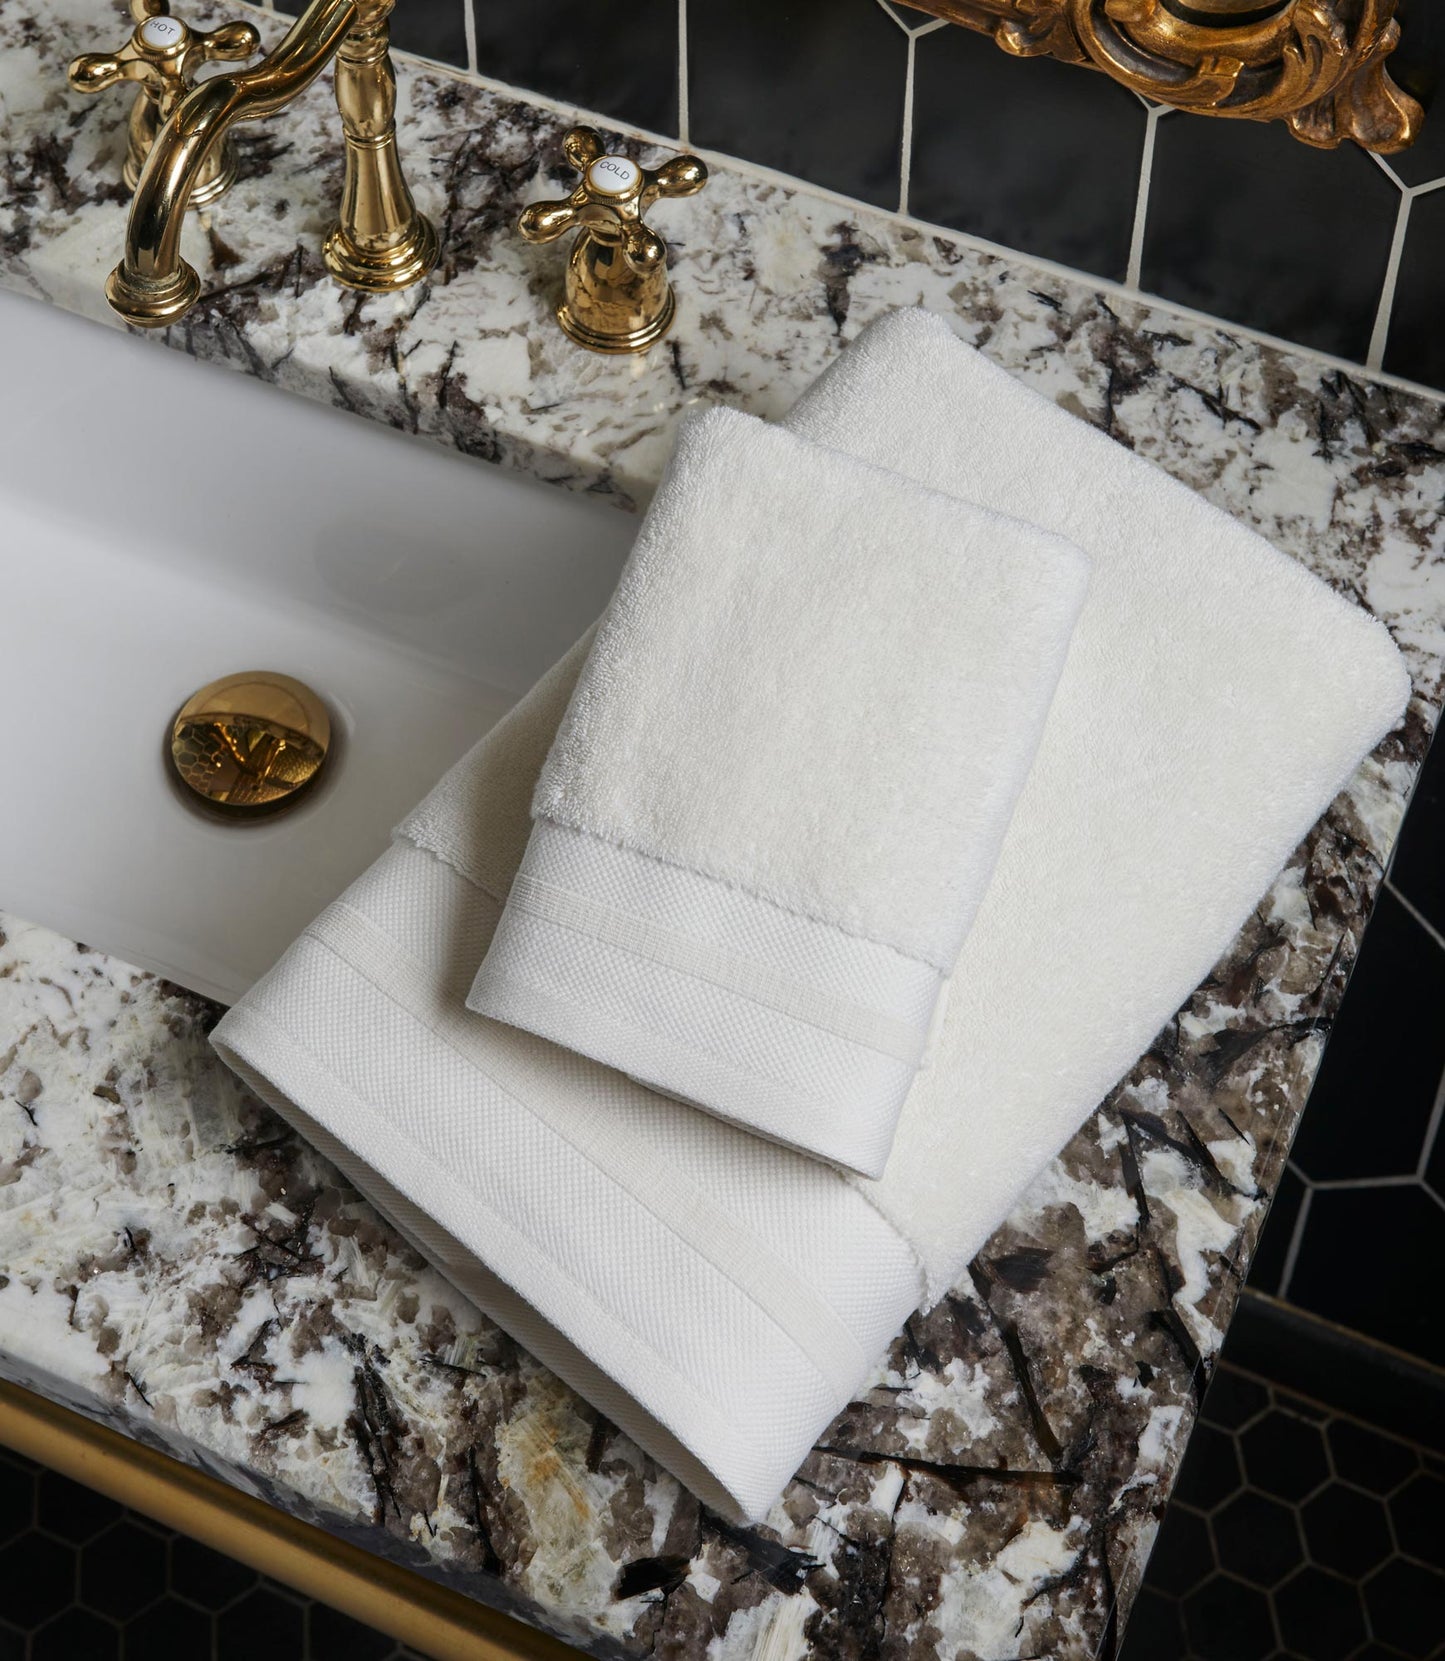 Coronado Luxe Bath Towels Place On Bathroom Sink